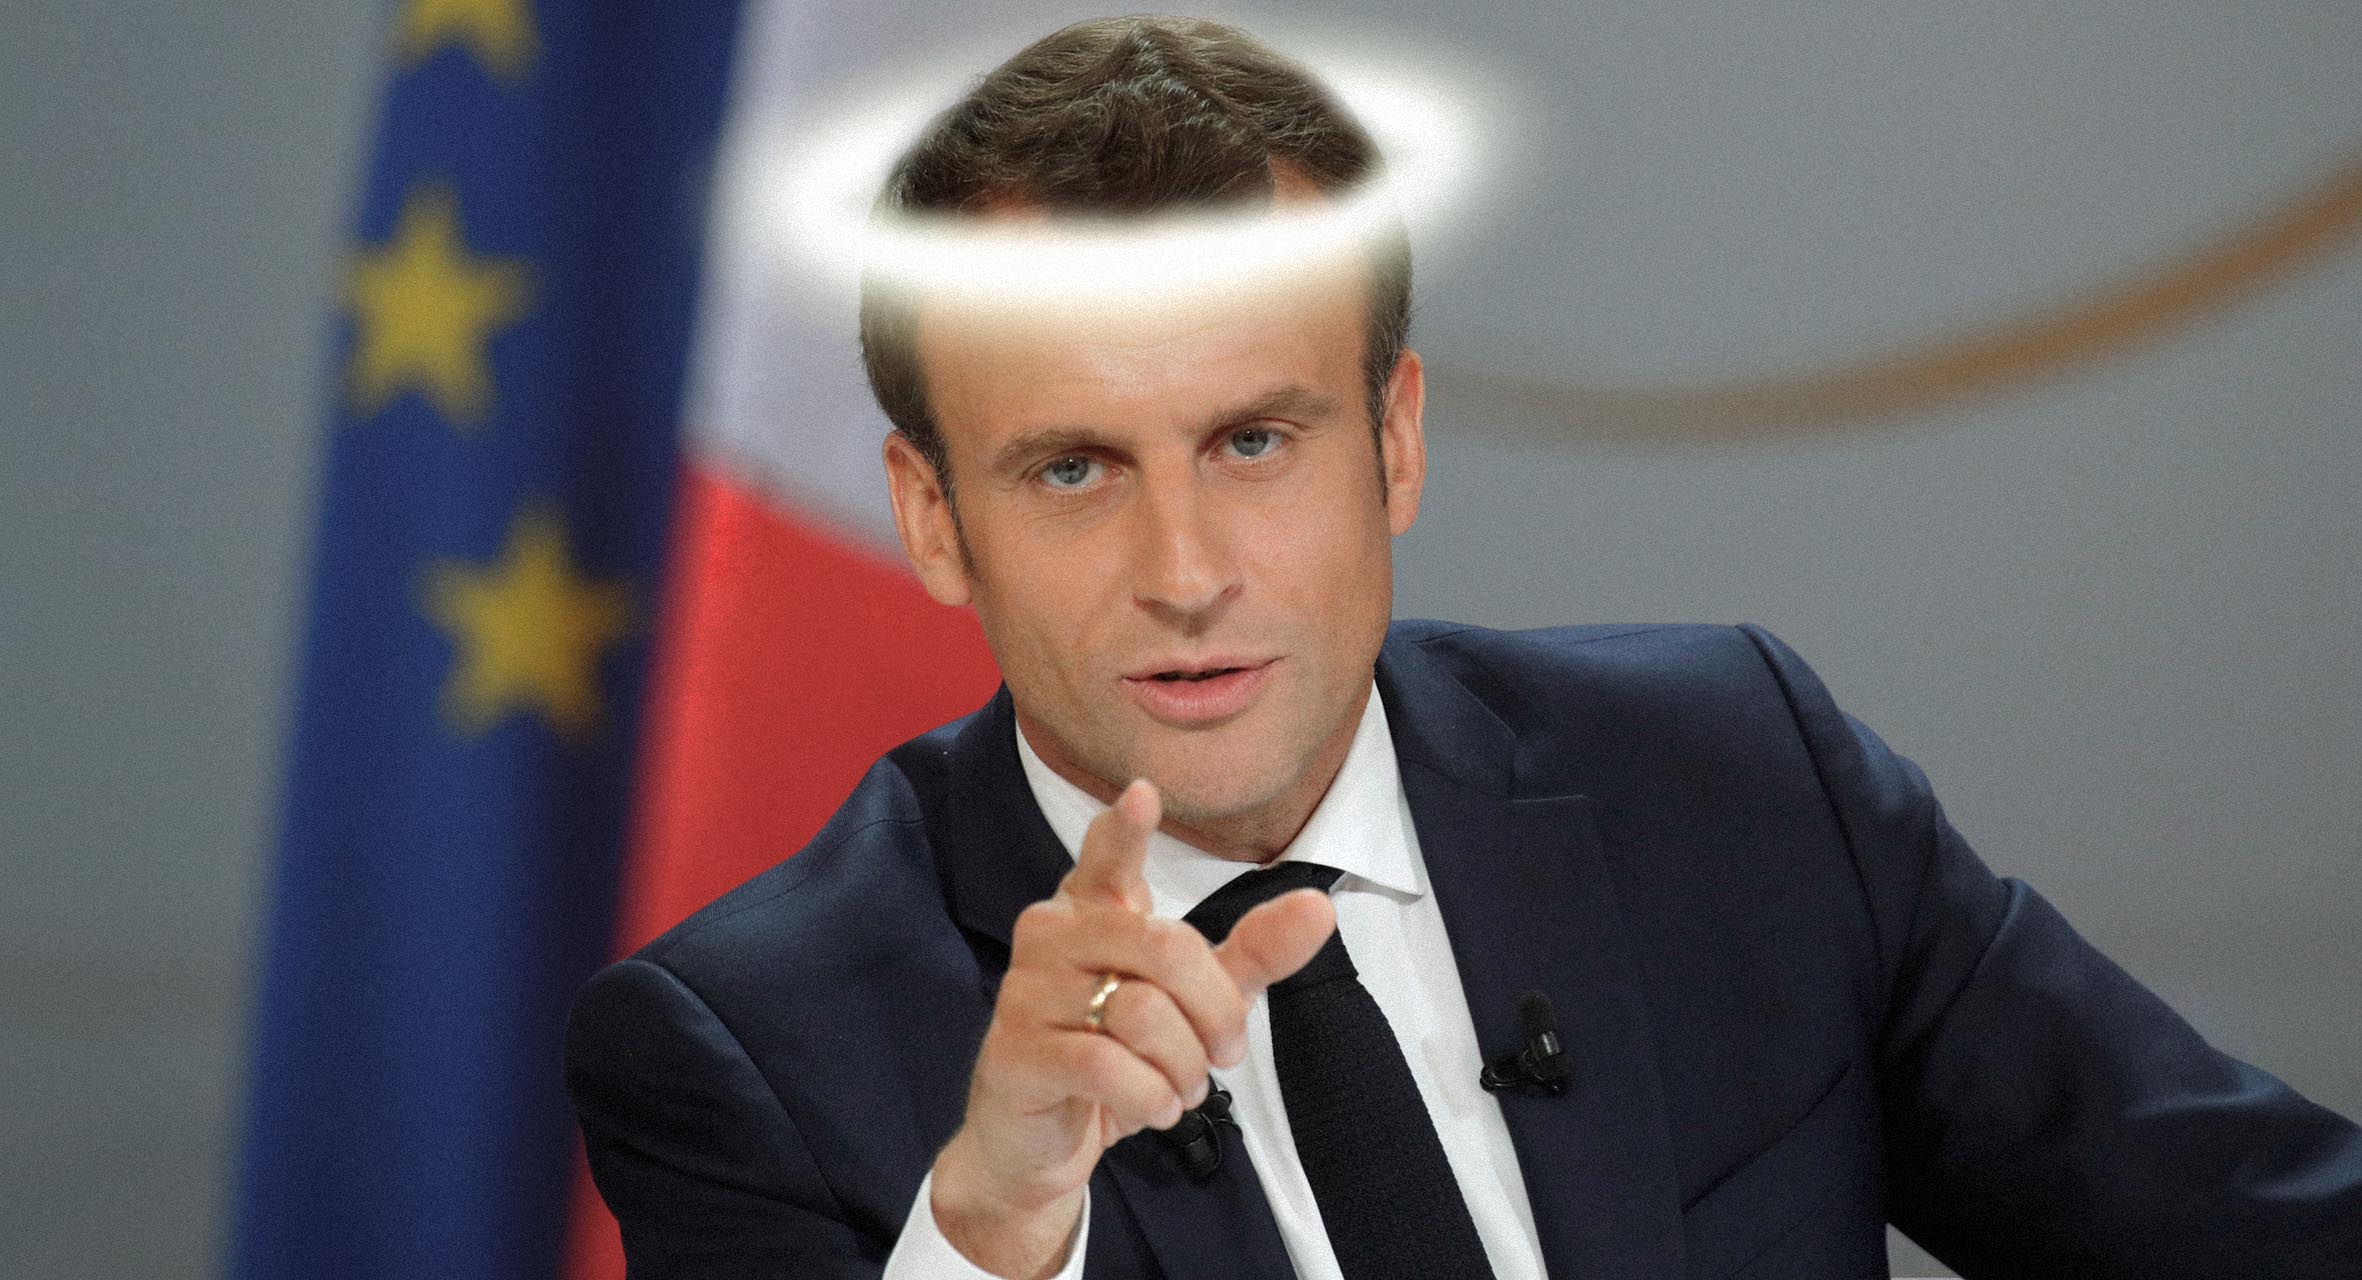 Macron warns against defaming sacred symbols of secularism, such as himself image